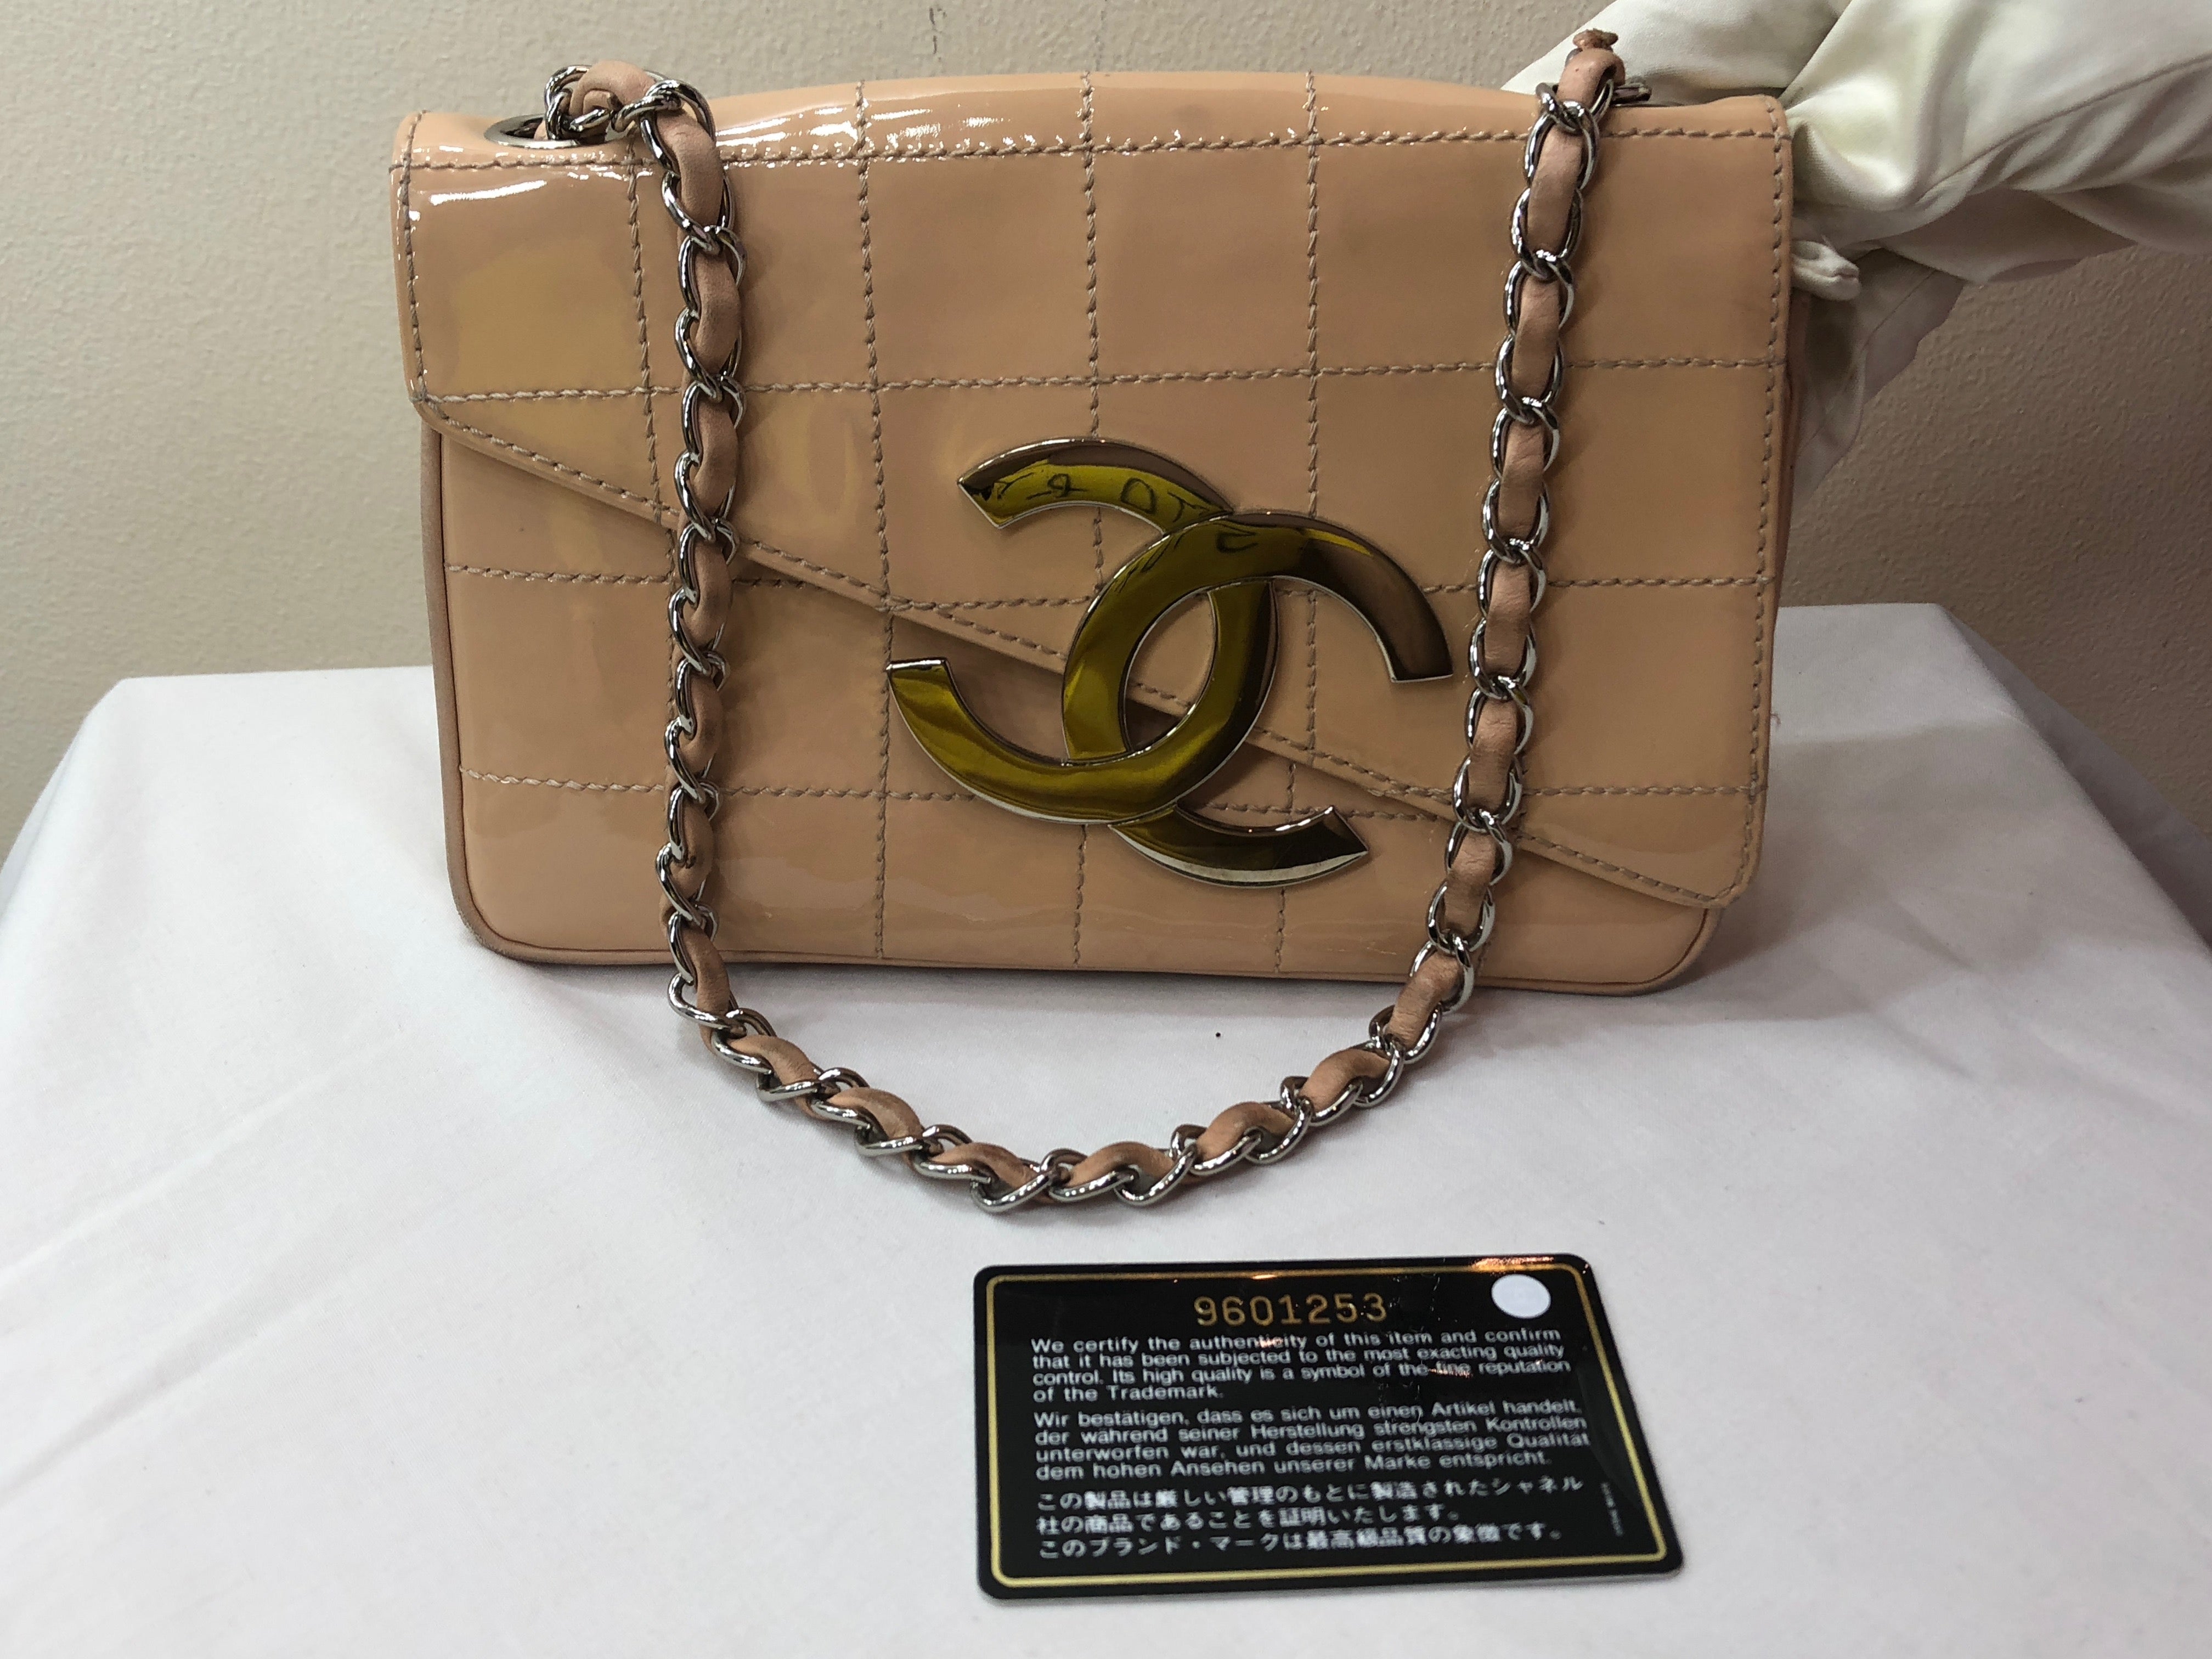 Chanel Patent Pink Small Handbag / Wristlet